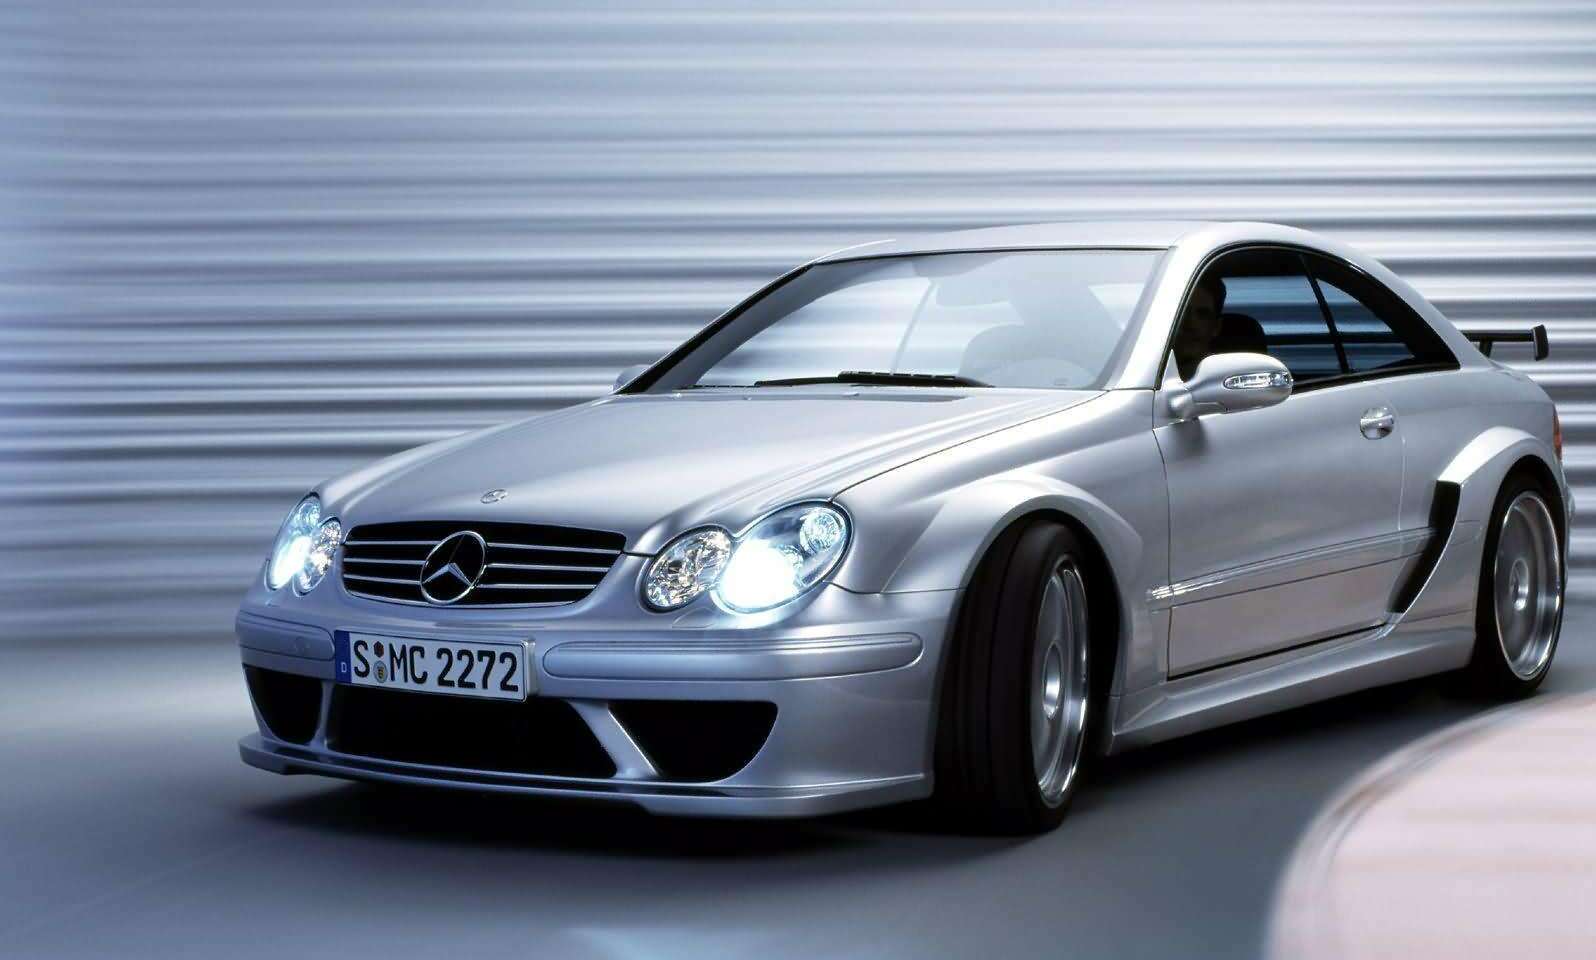 Mercedes Benz Clk Dtm Amg 2004 1600 03